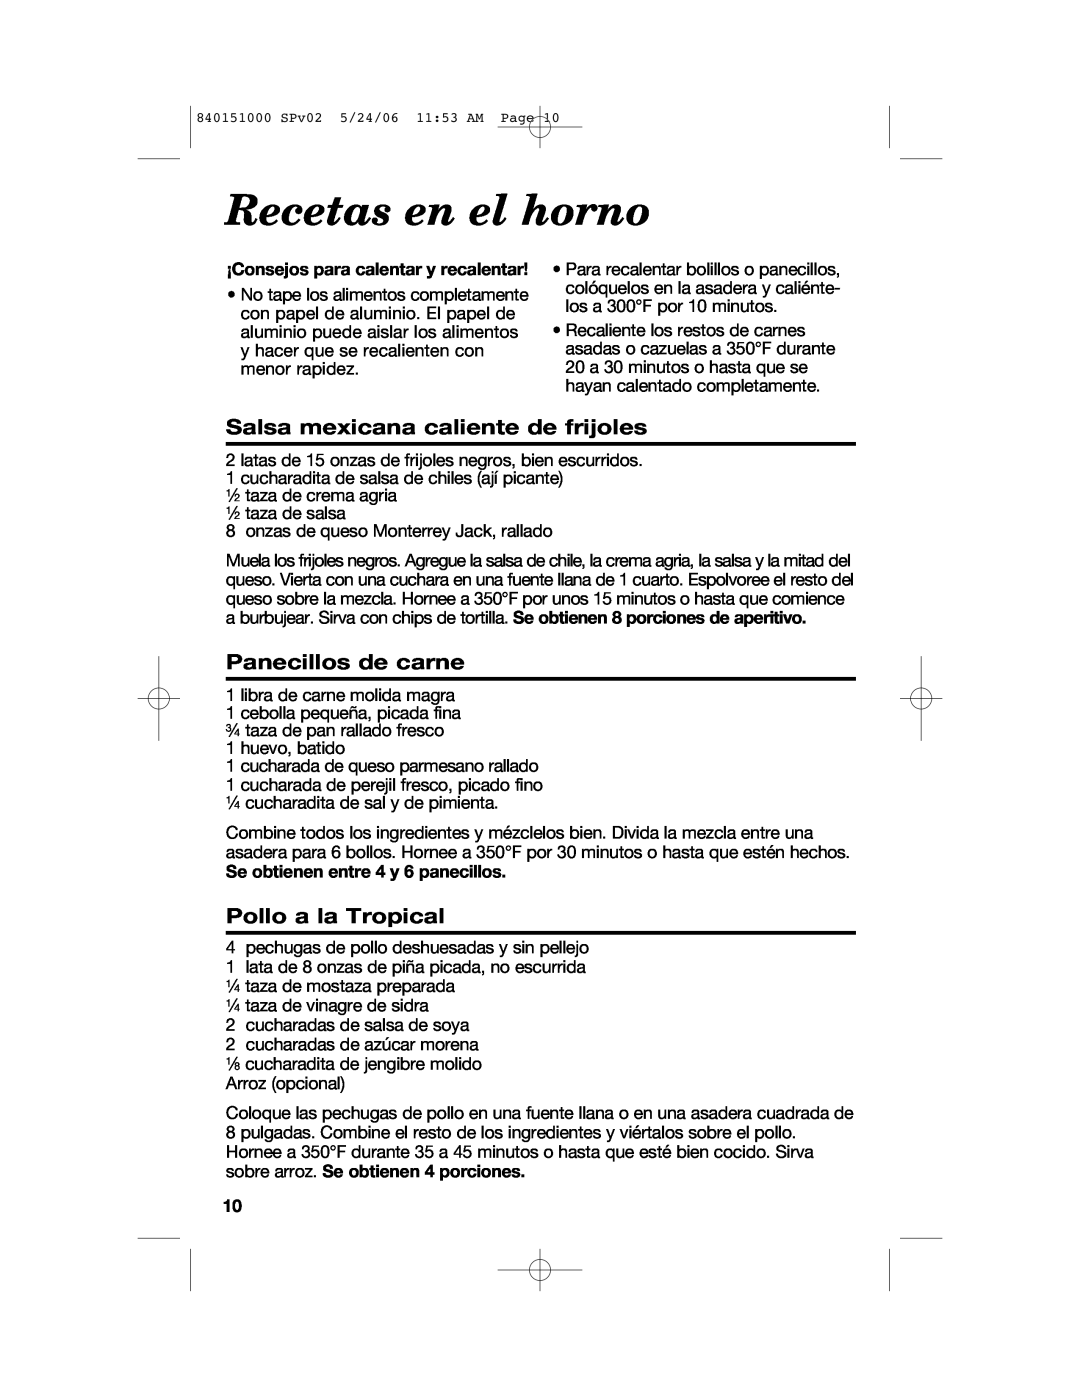 Hamilton Beach 840151000 manual Recetas en el horno, Salsa mexicana caliente de frijoles, Panecillos de carne 